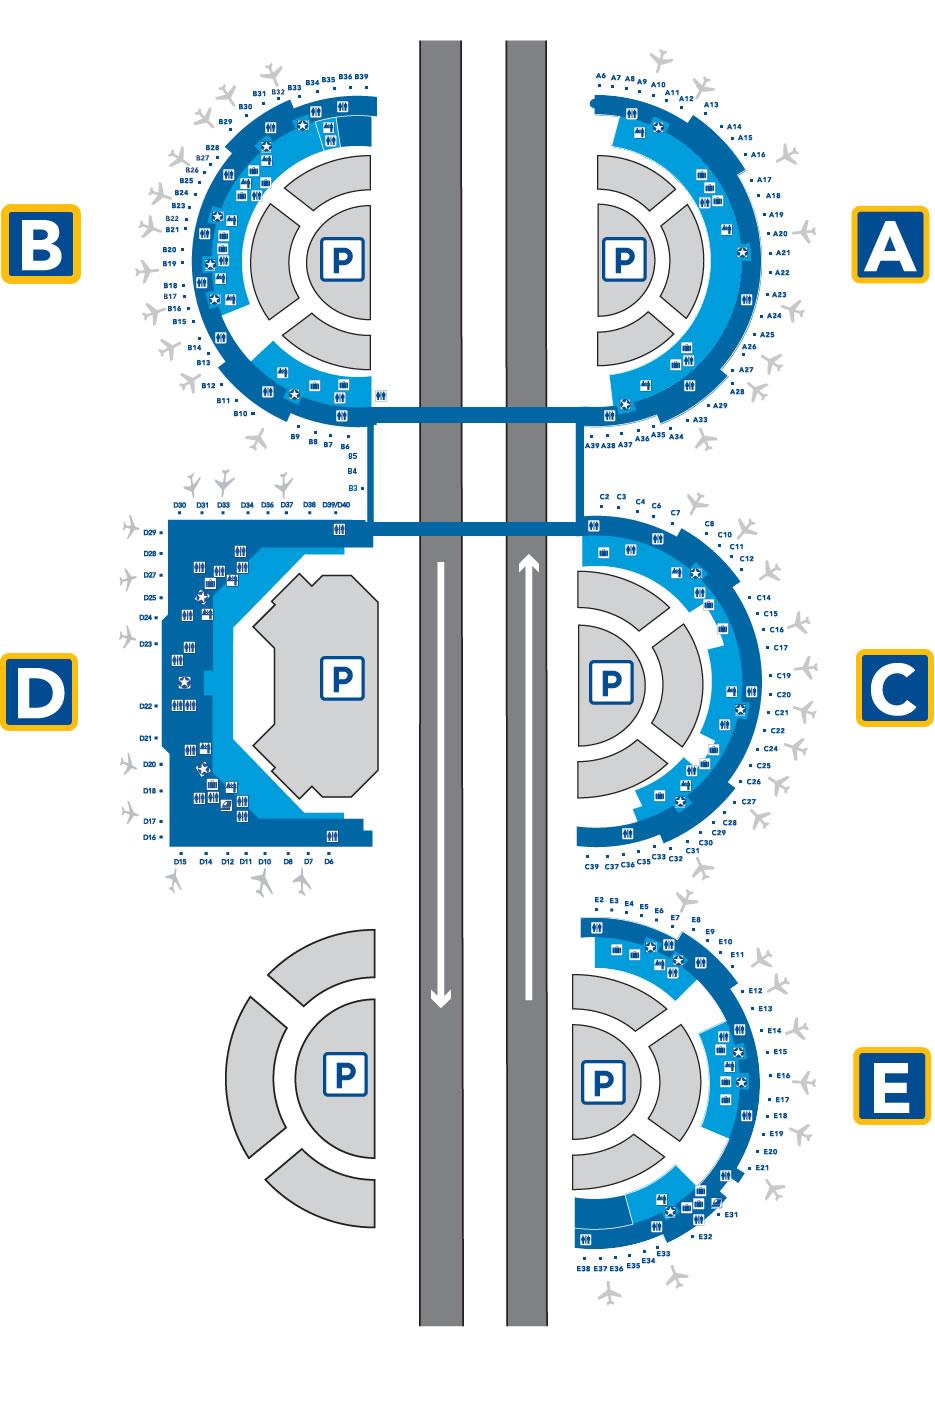 Figure 2 Decentralized Terminal Design of DFW Airport